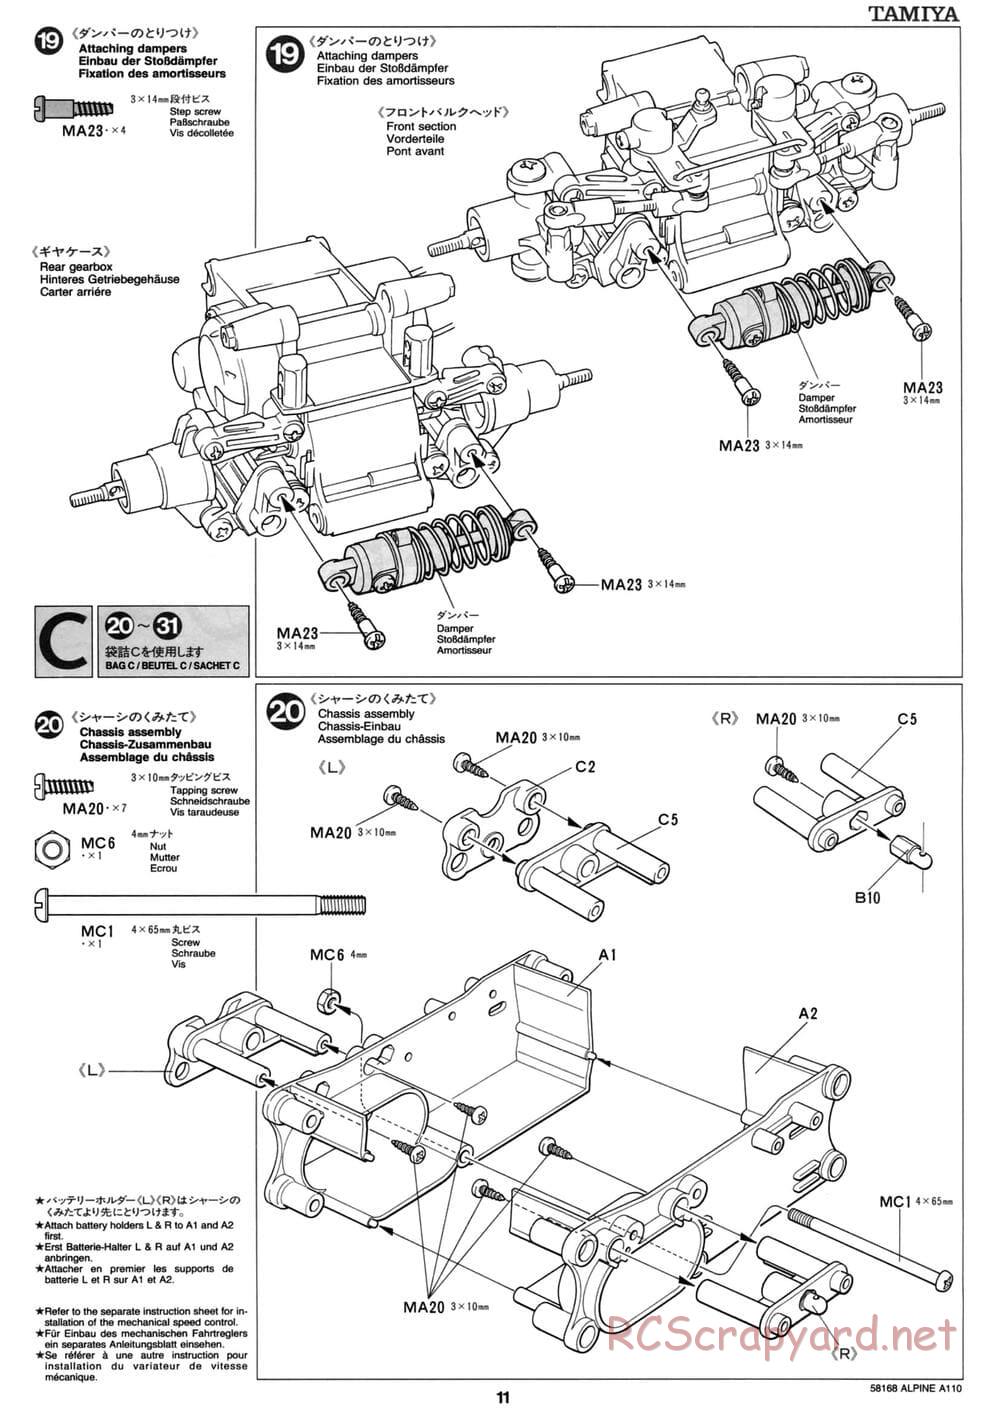 Tamiya - Alpine A110 - M02 Chassis - Manual - Page 11